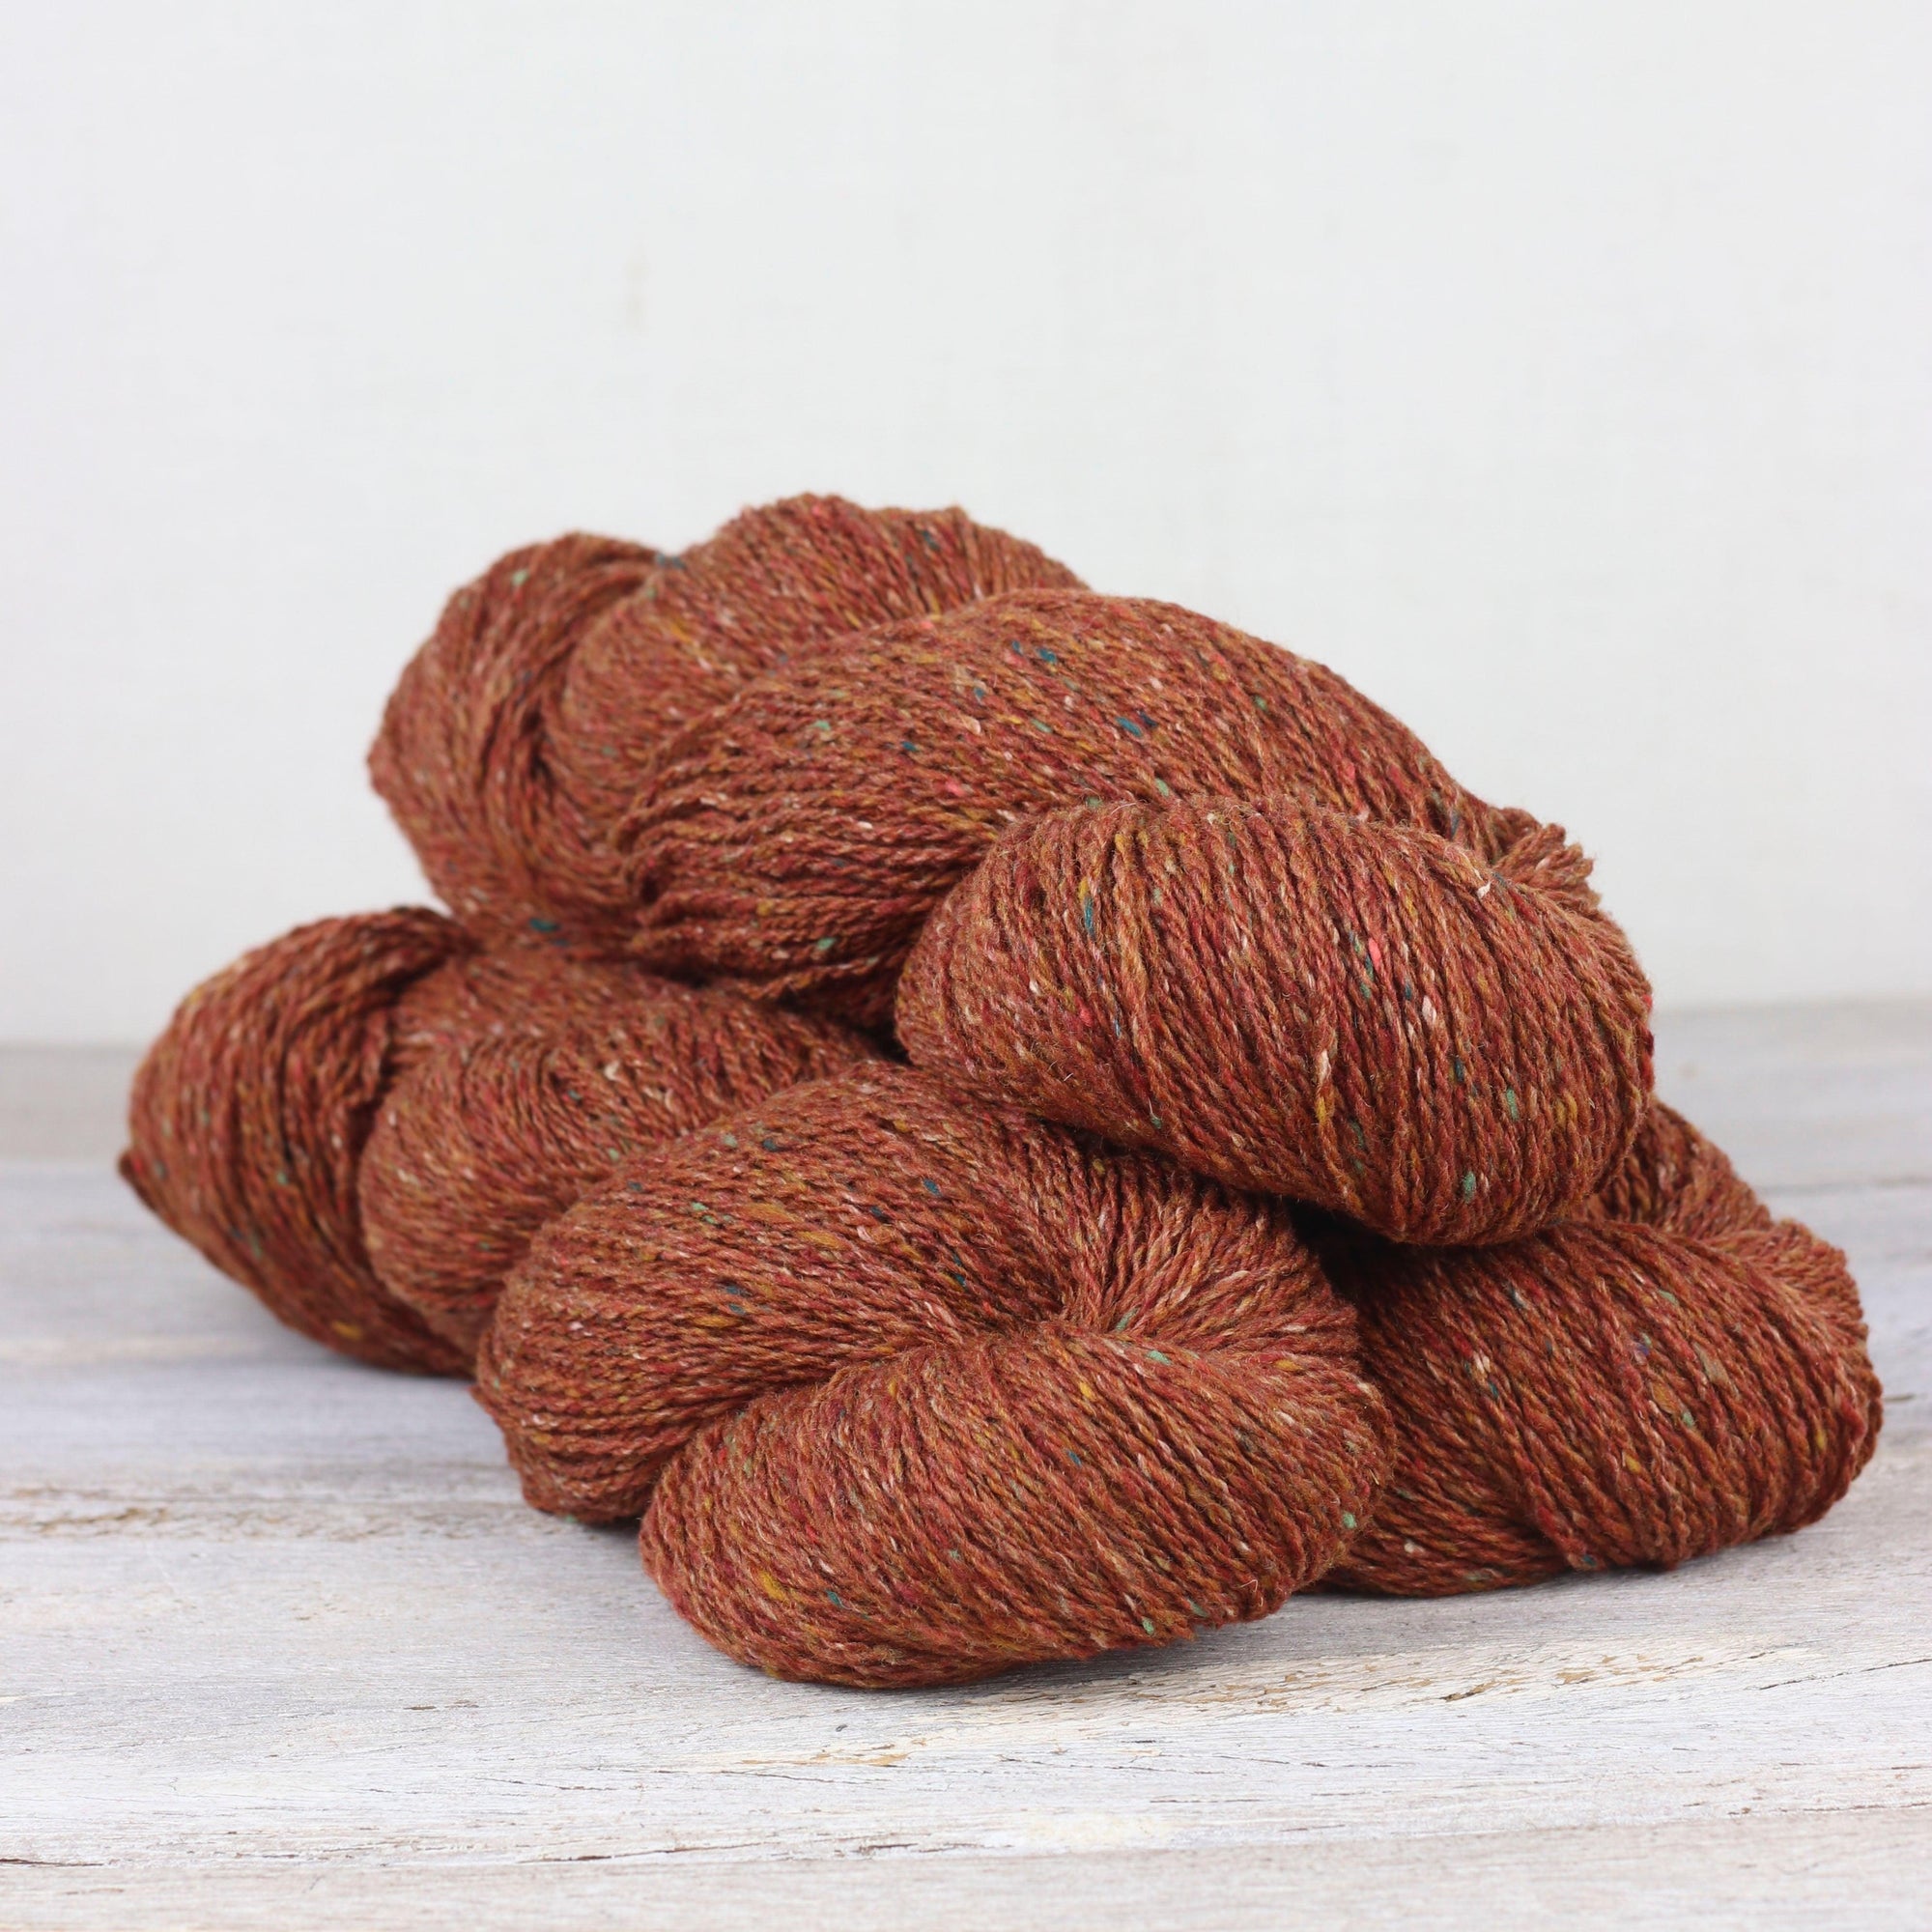 The Fibre Co. The Fibre Co. Arranmore Light - Copper Coast - DK Knitting Yarn